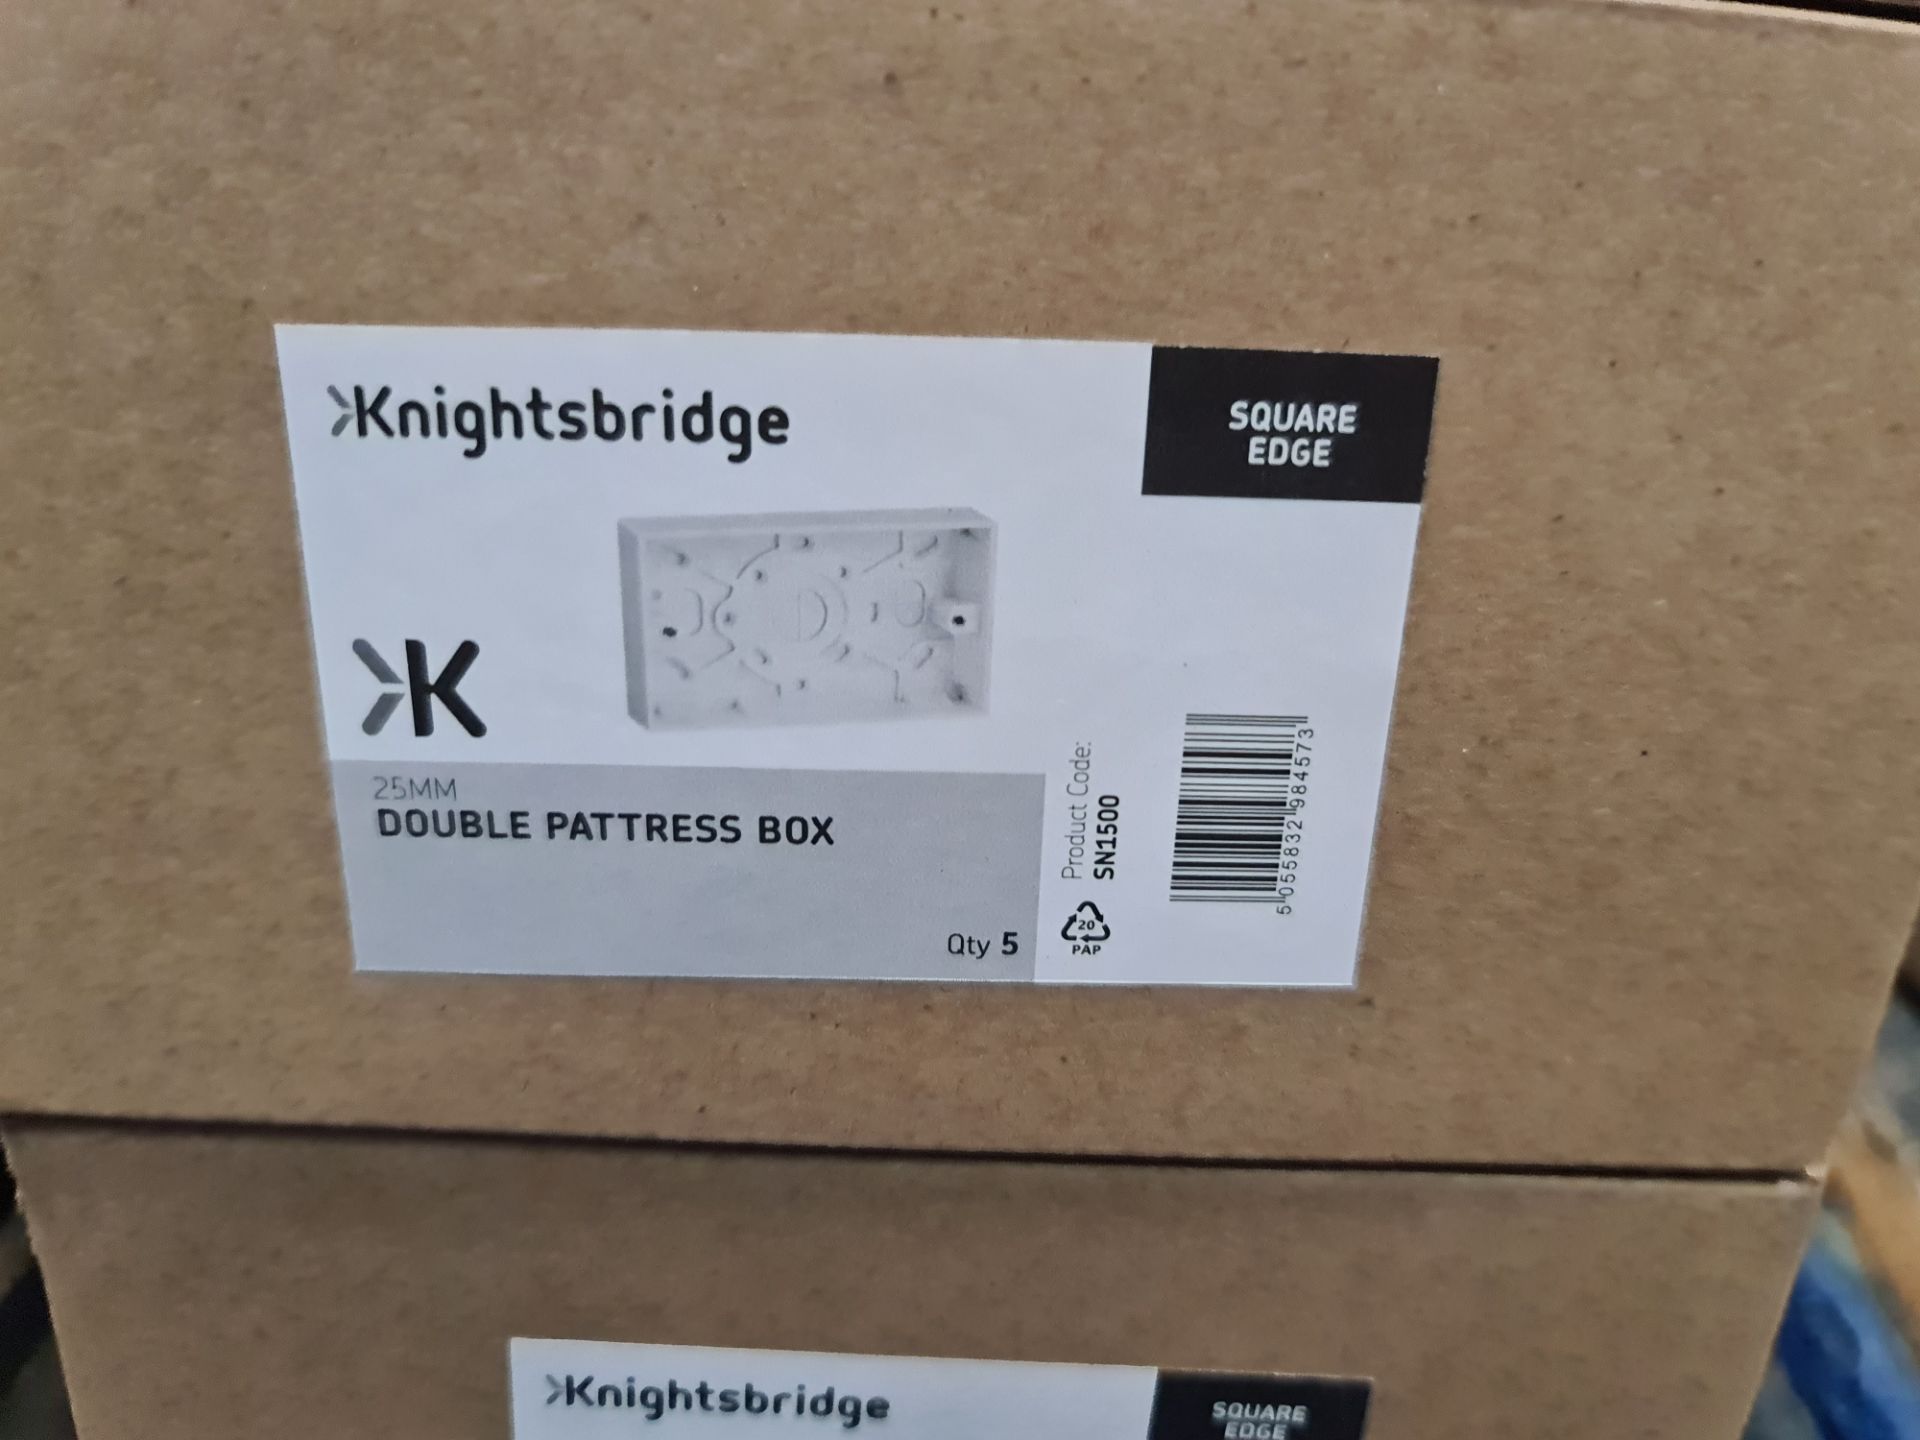 6 boxes of Knightsbridge pattress boxes